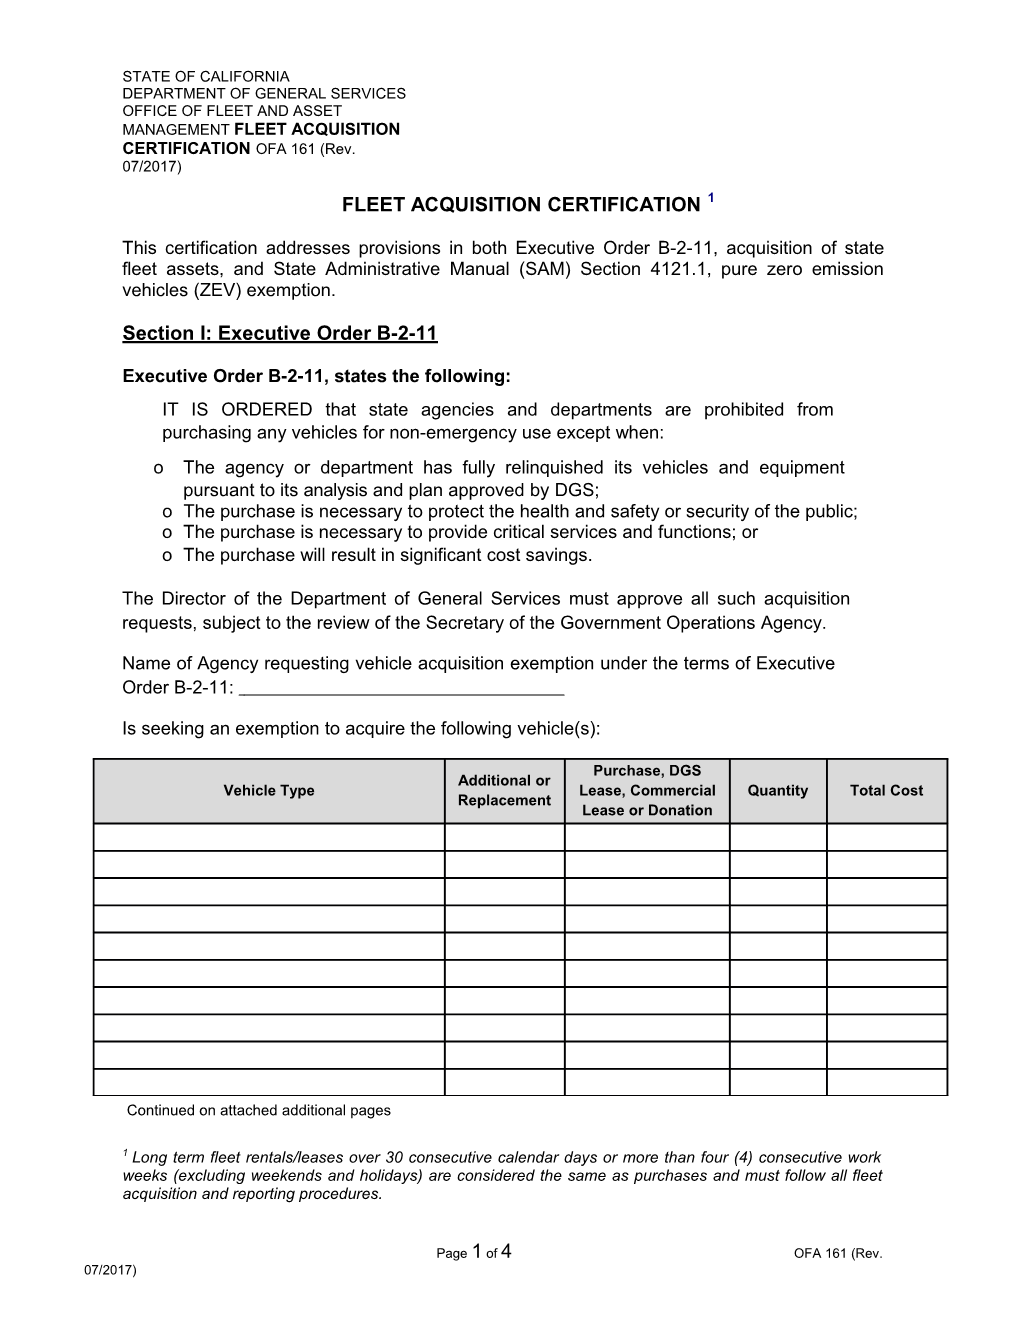 Fleet Acquisition Certification1